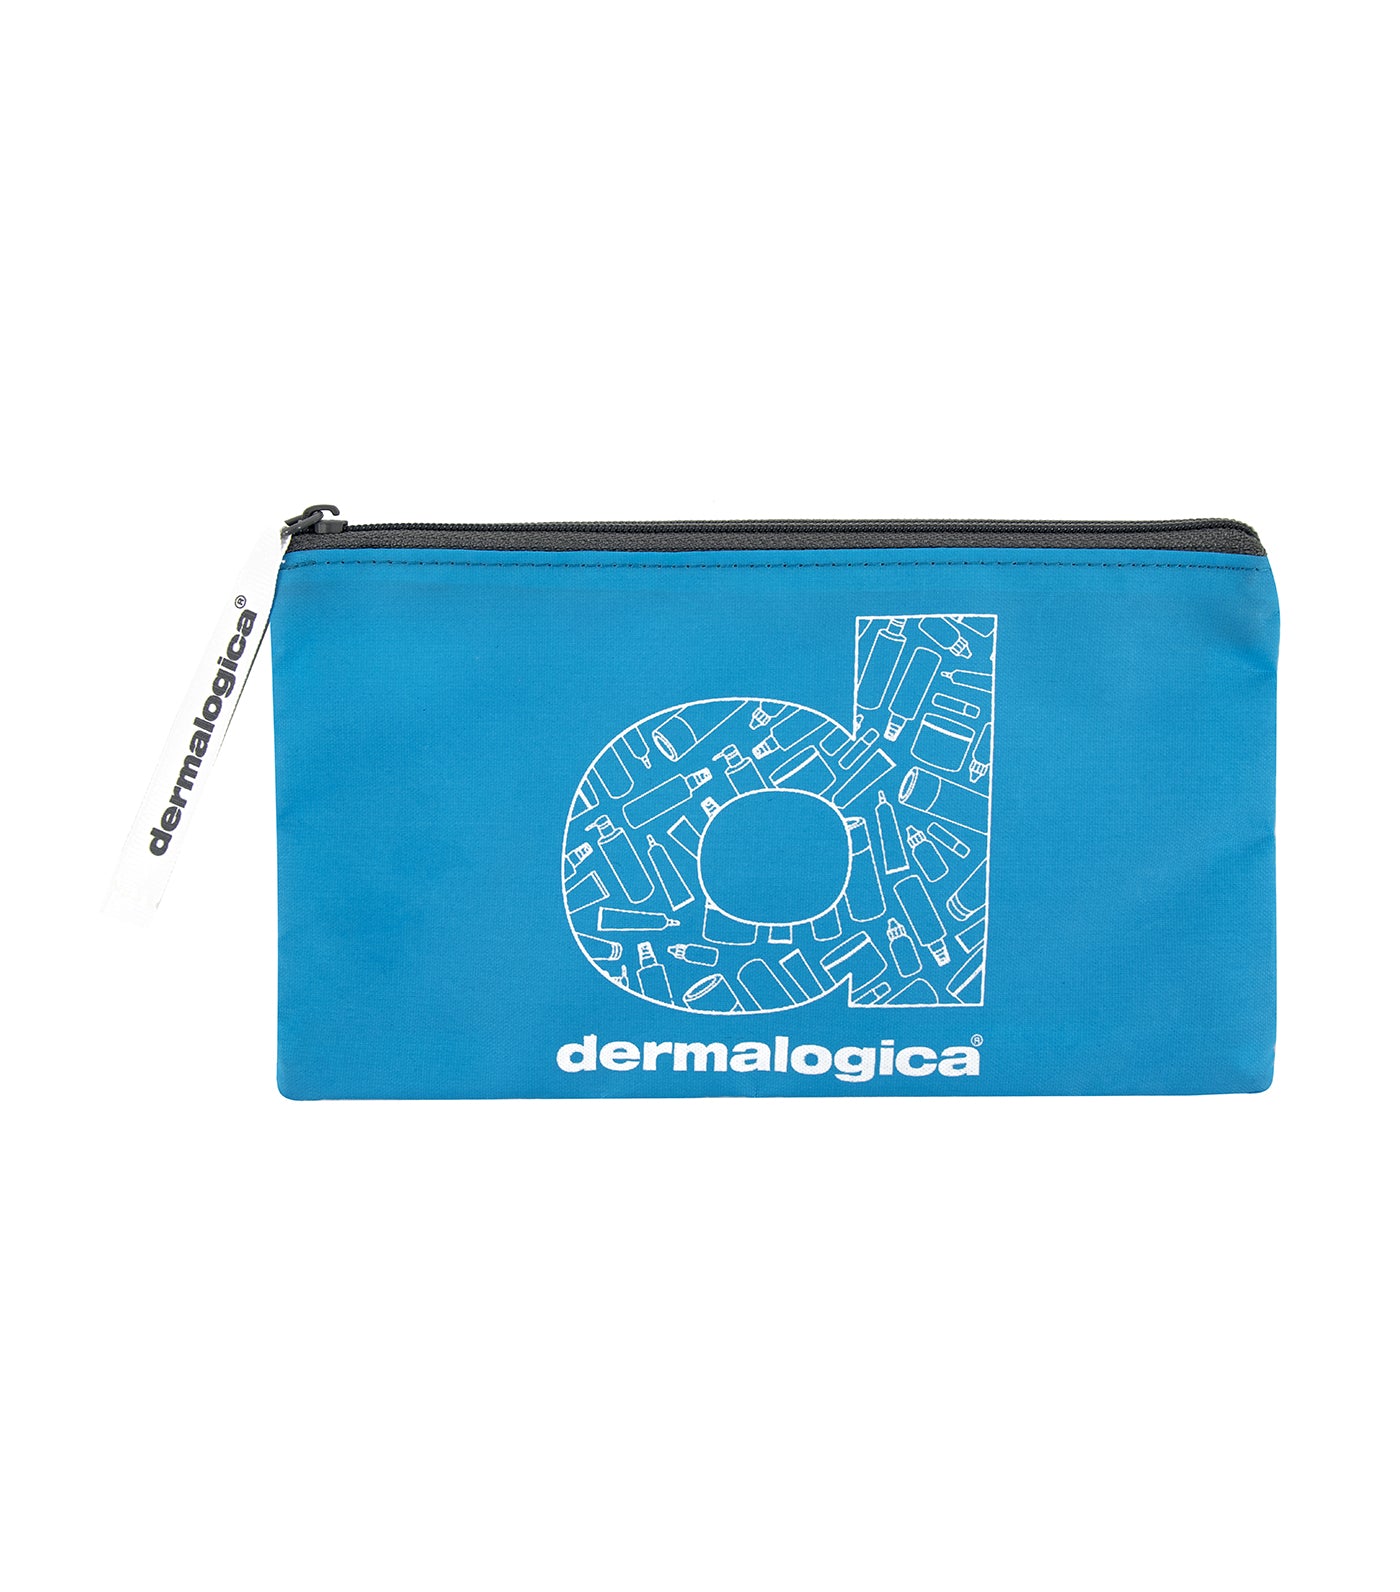 dermalogica free pouch